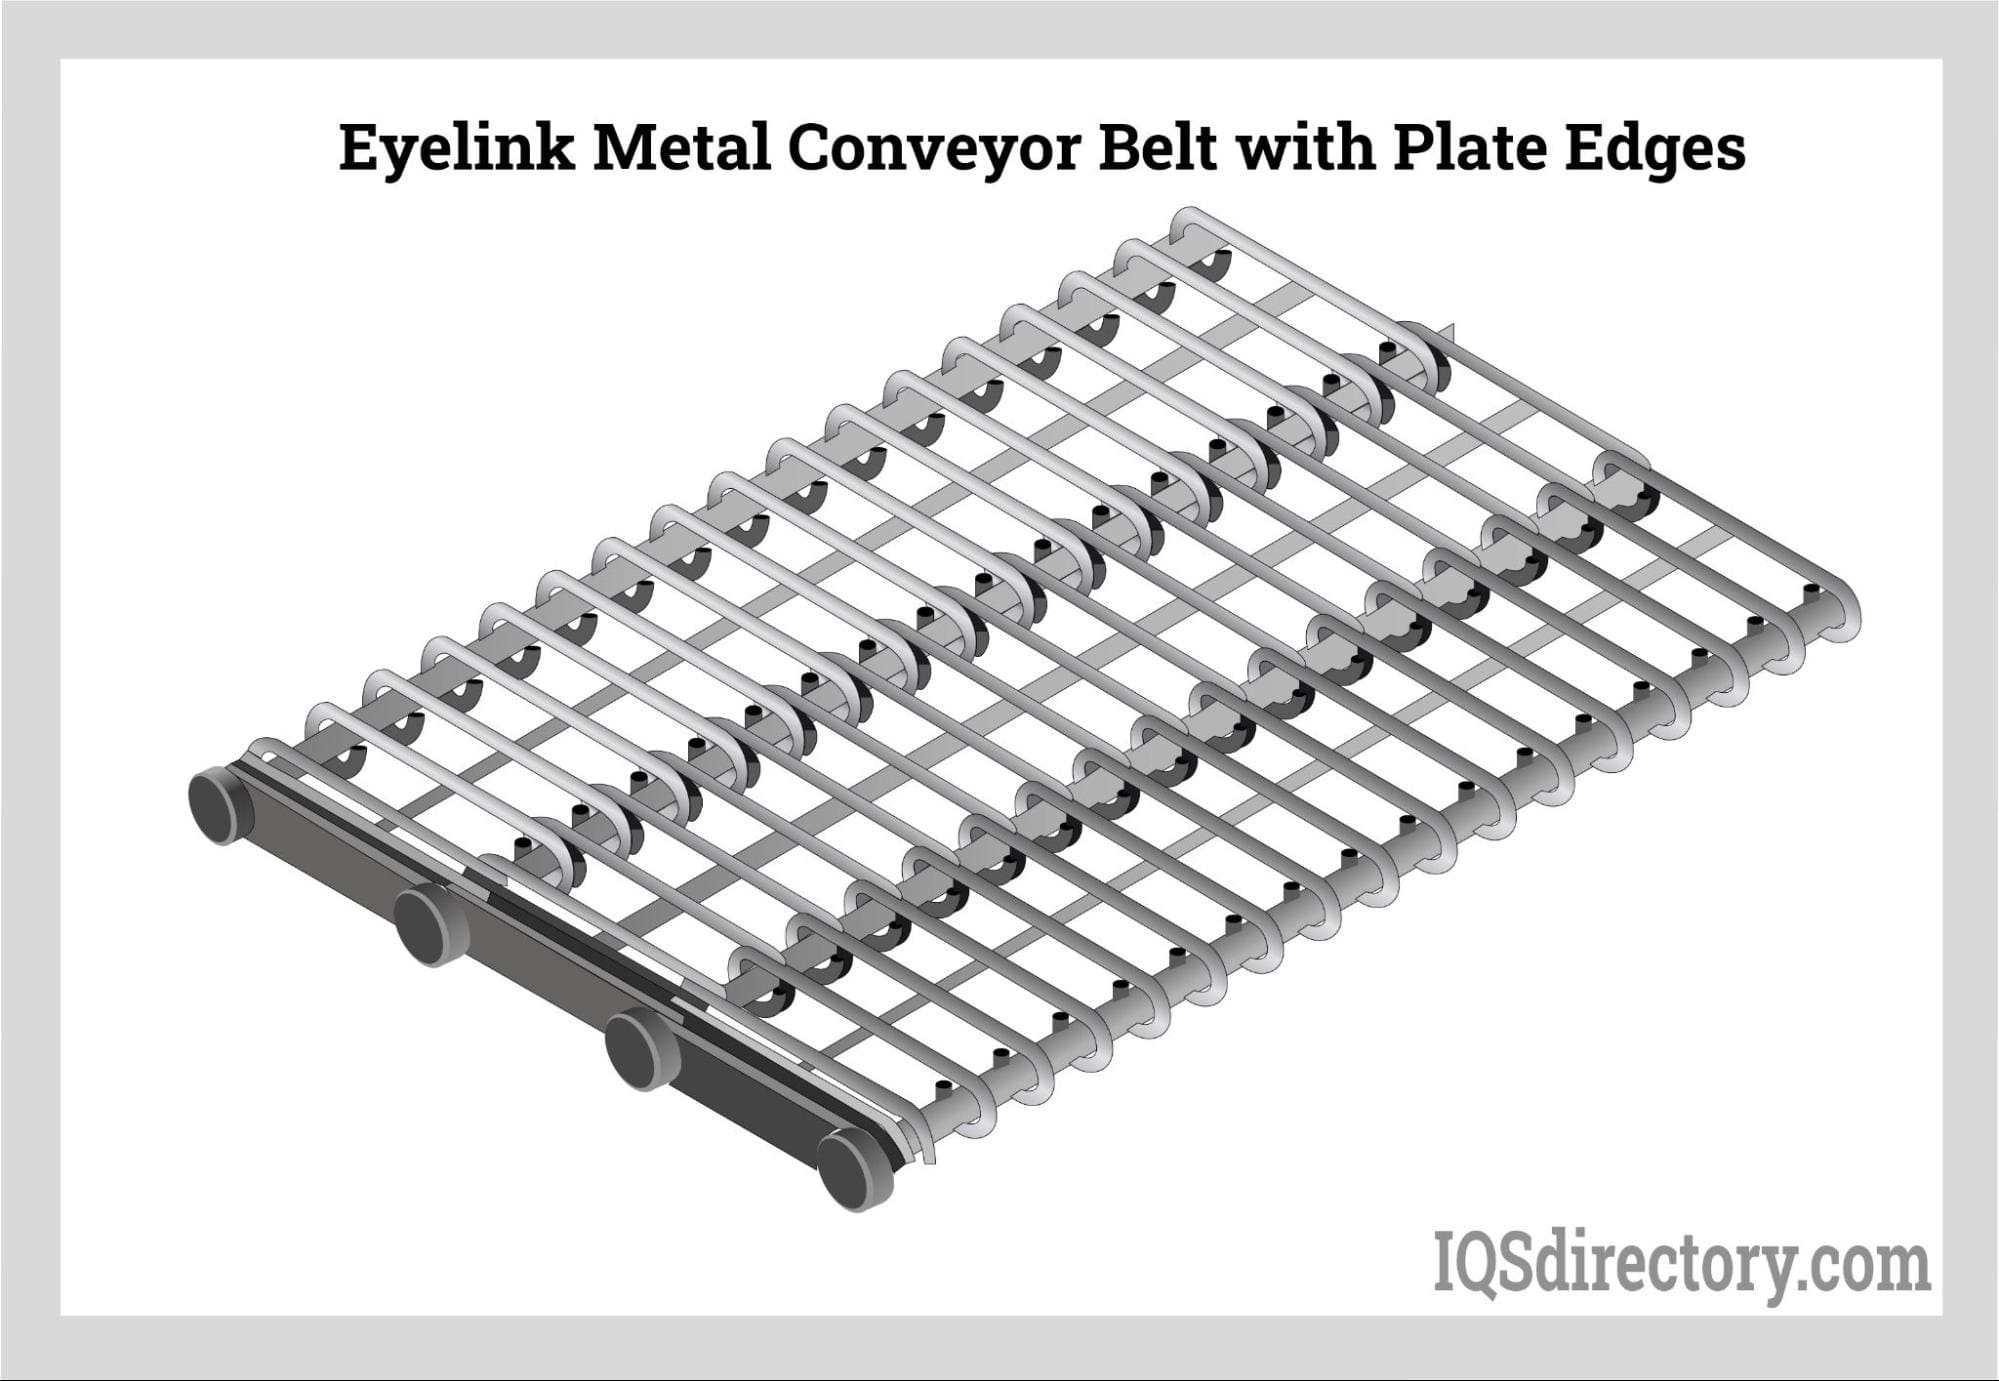 Eyelink Metal Conveyor Belt with Plate Edges